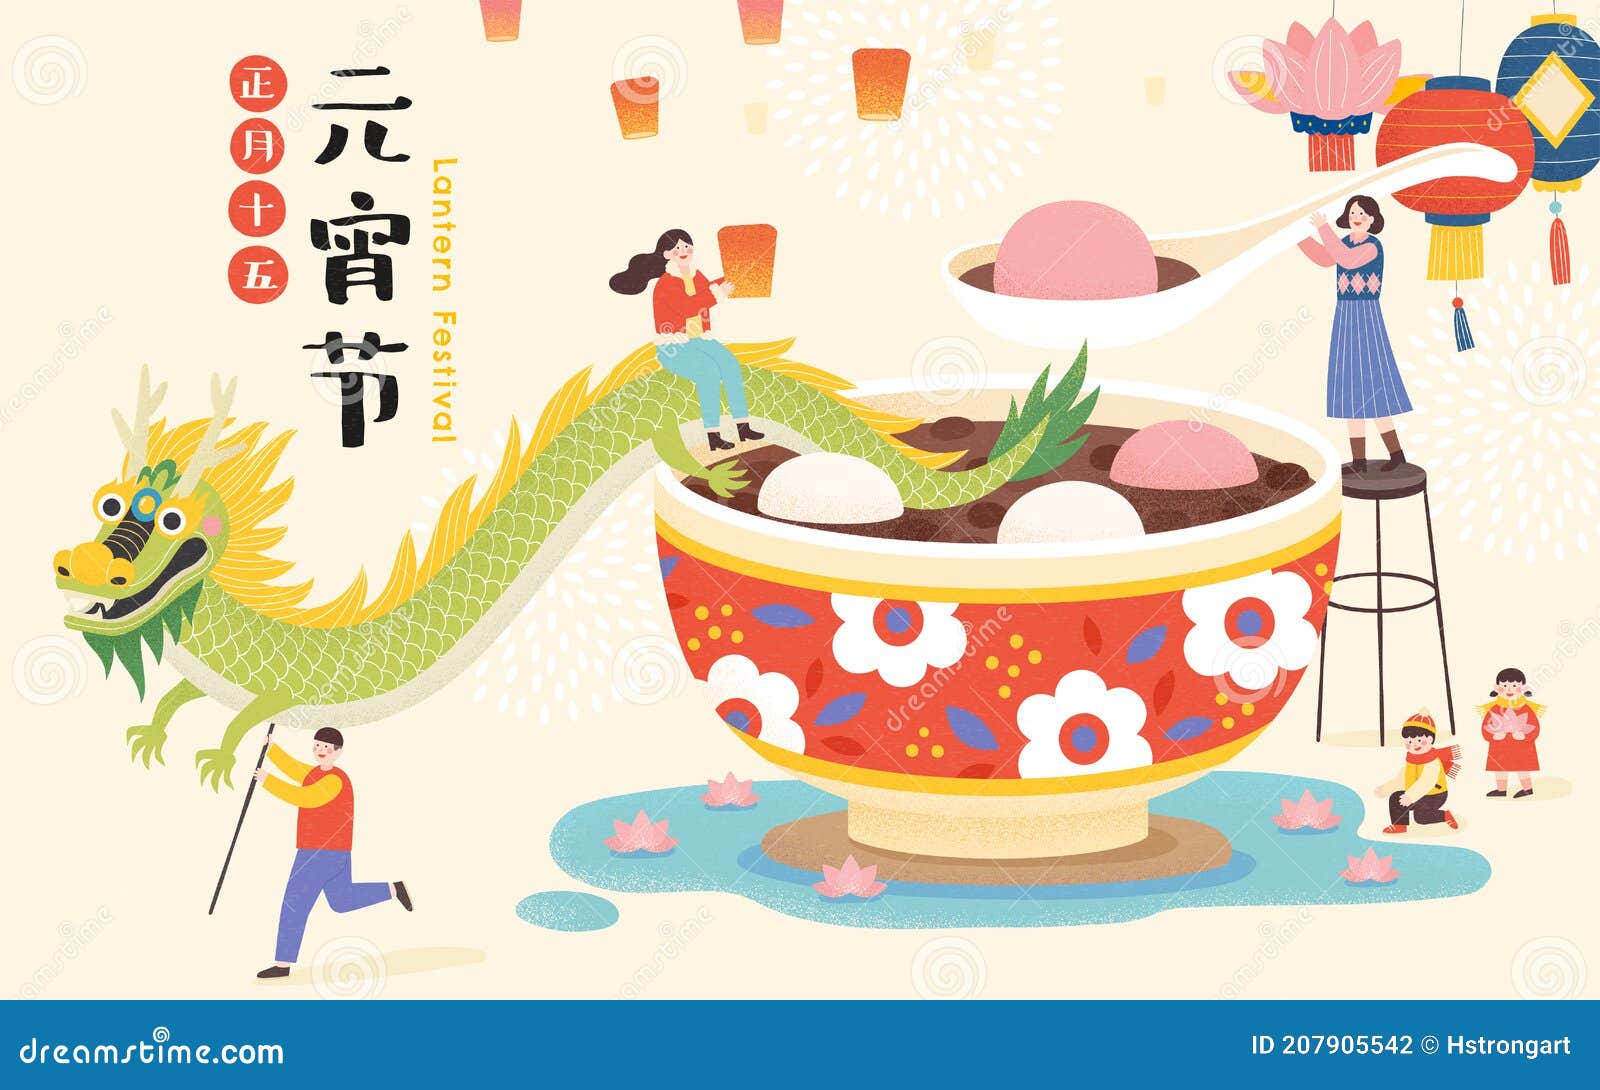 cny lantern festival poster